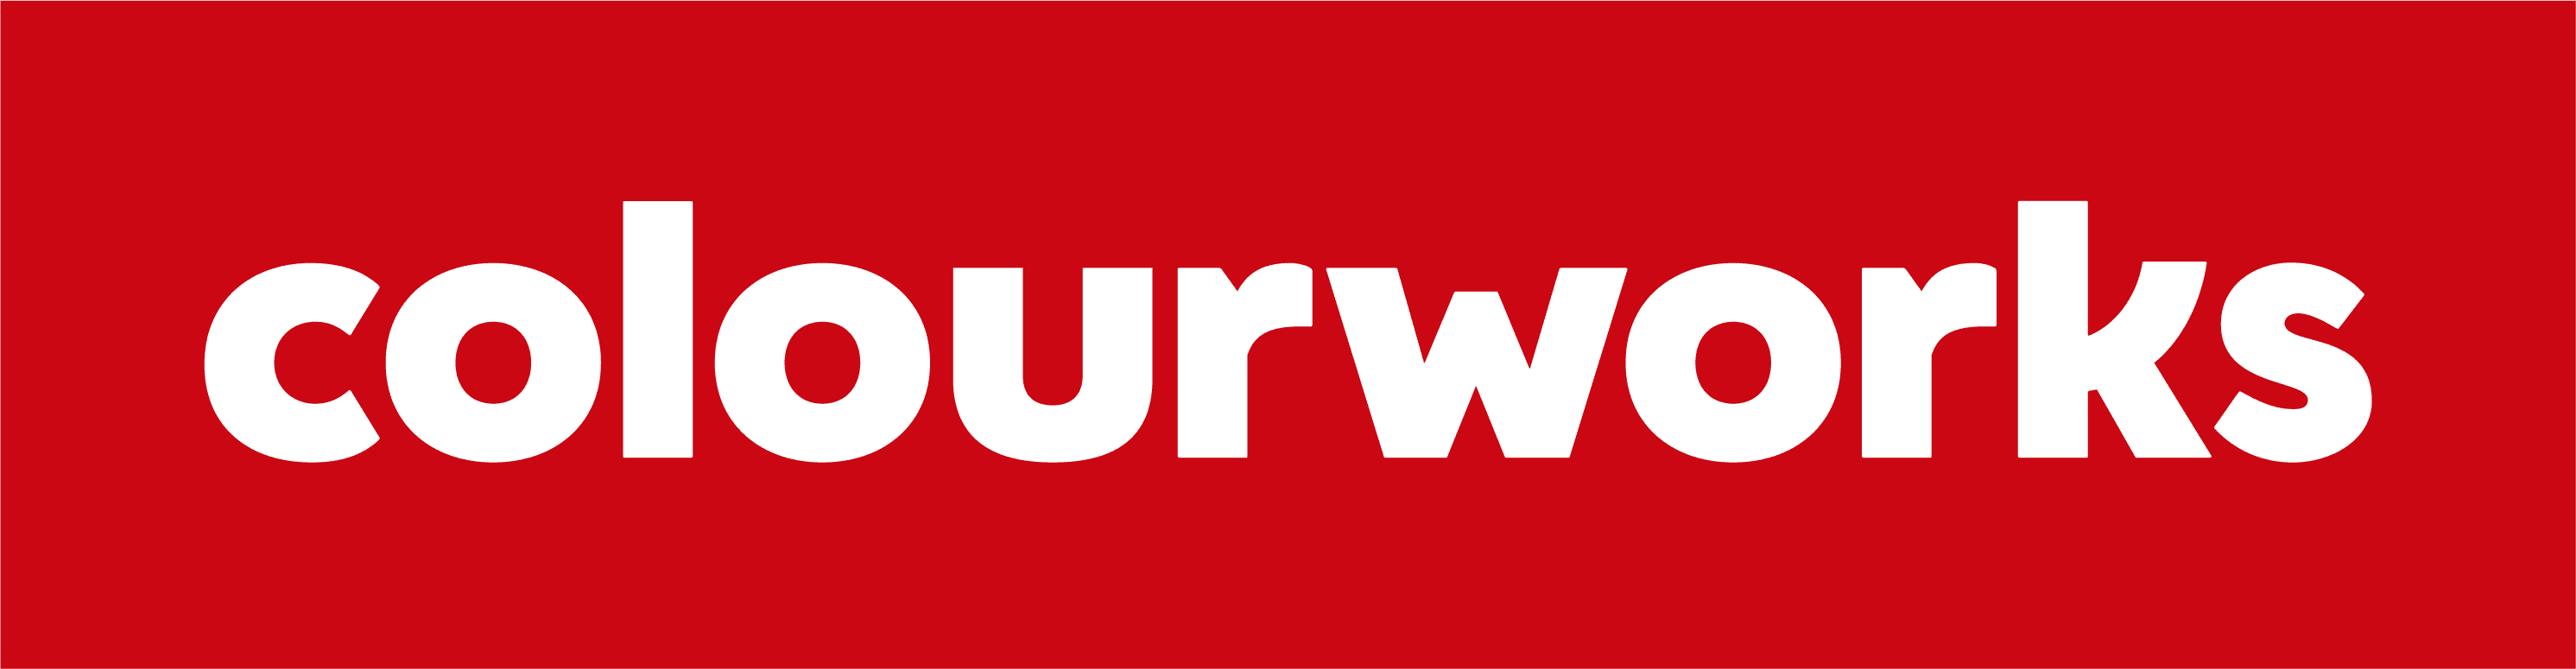 Colourworks_Logo_White-on-Red